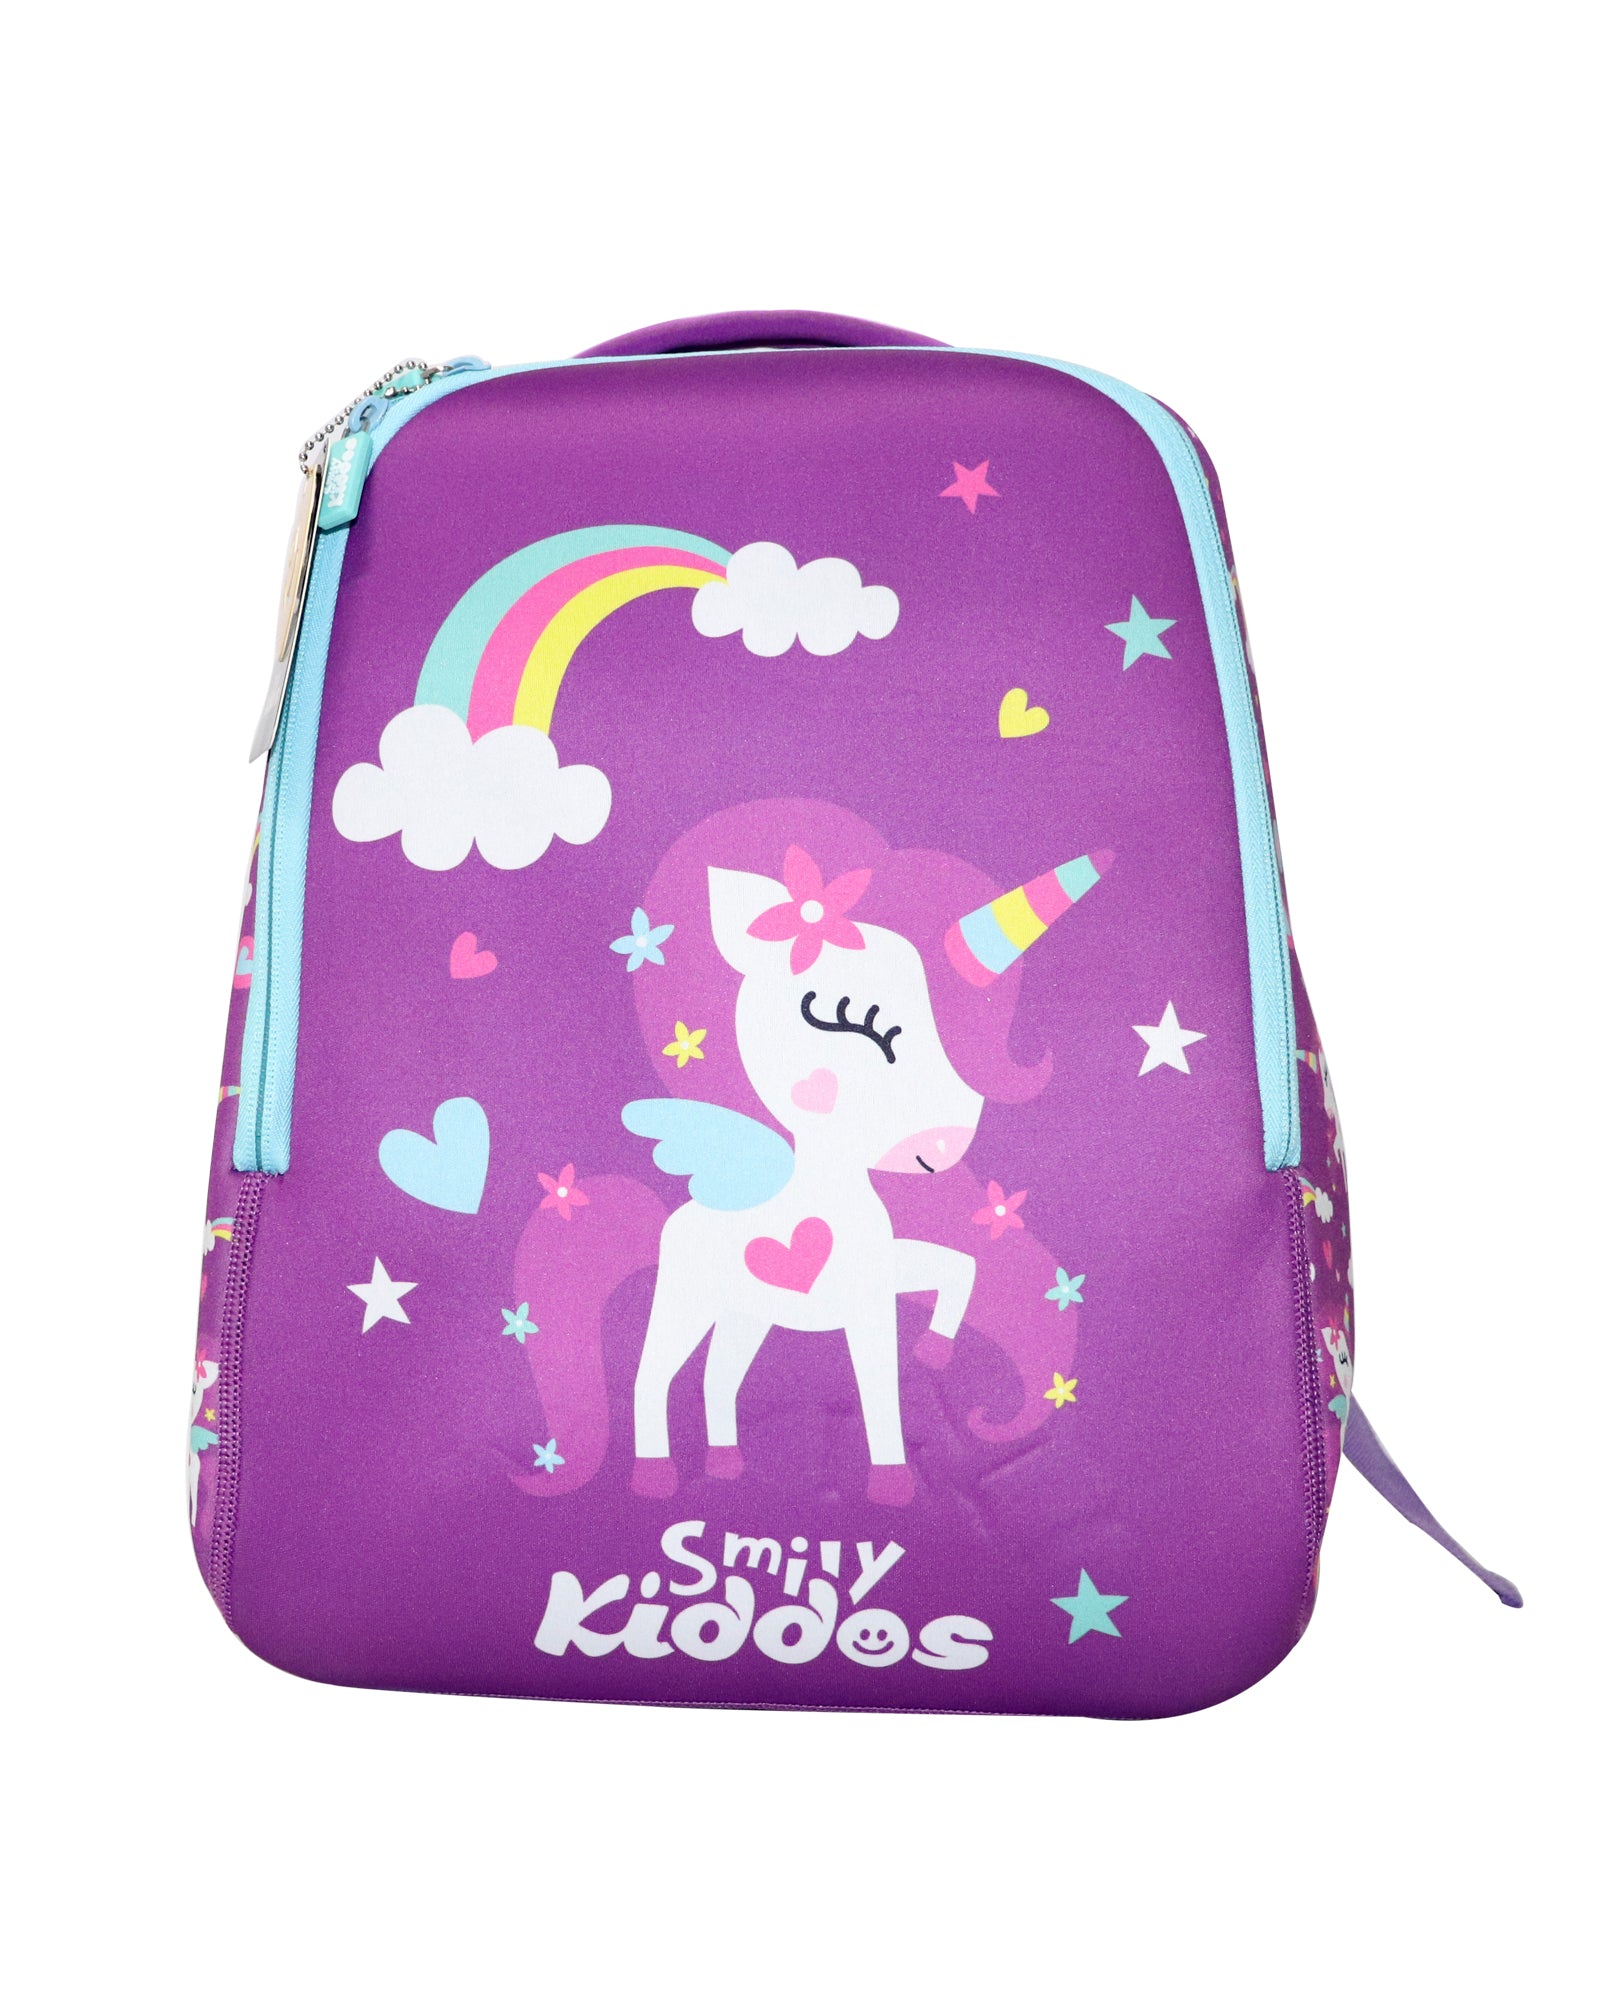 Smily Kiddos Junior Backpack